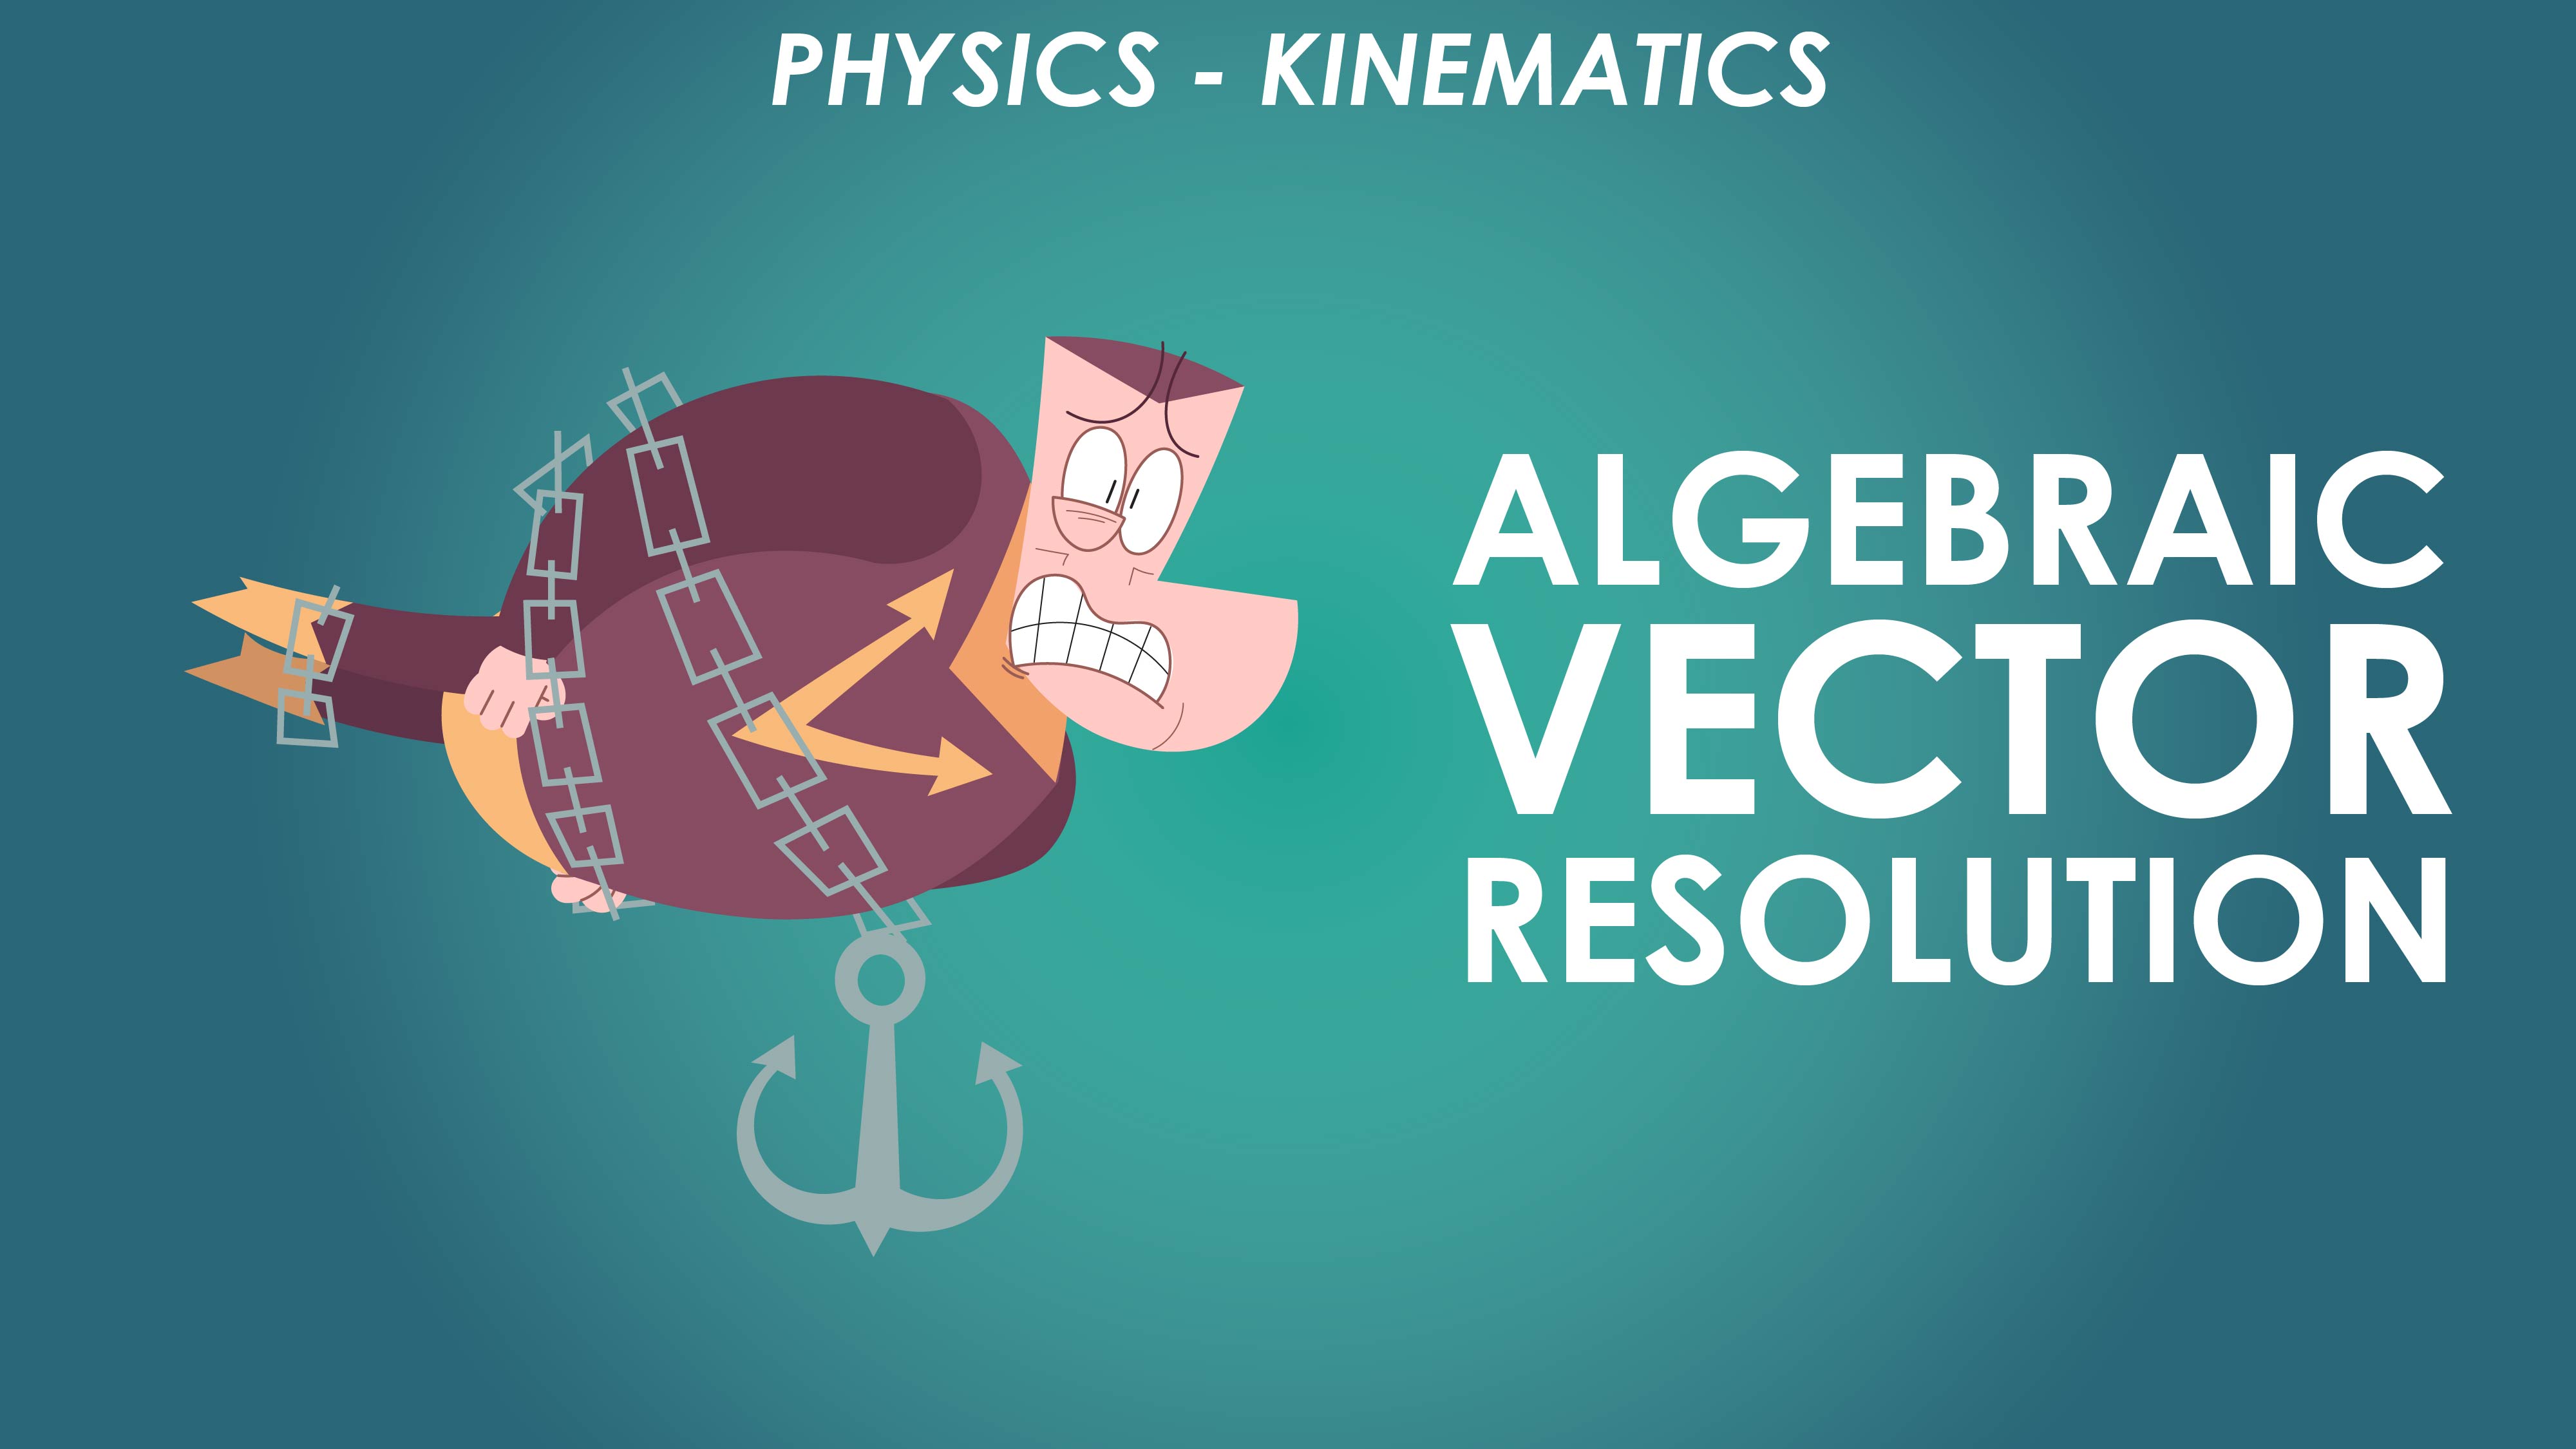 Algebraic Vector Resolution - Motion in a Straight Line